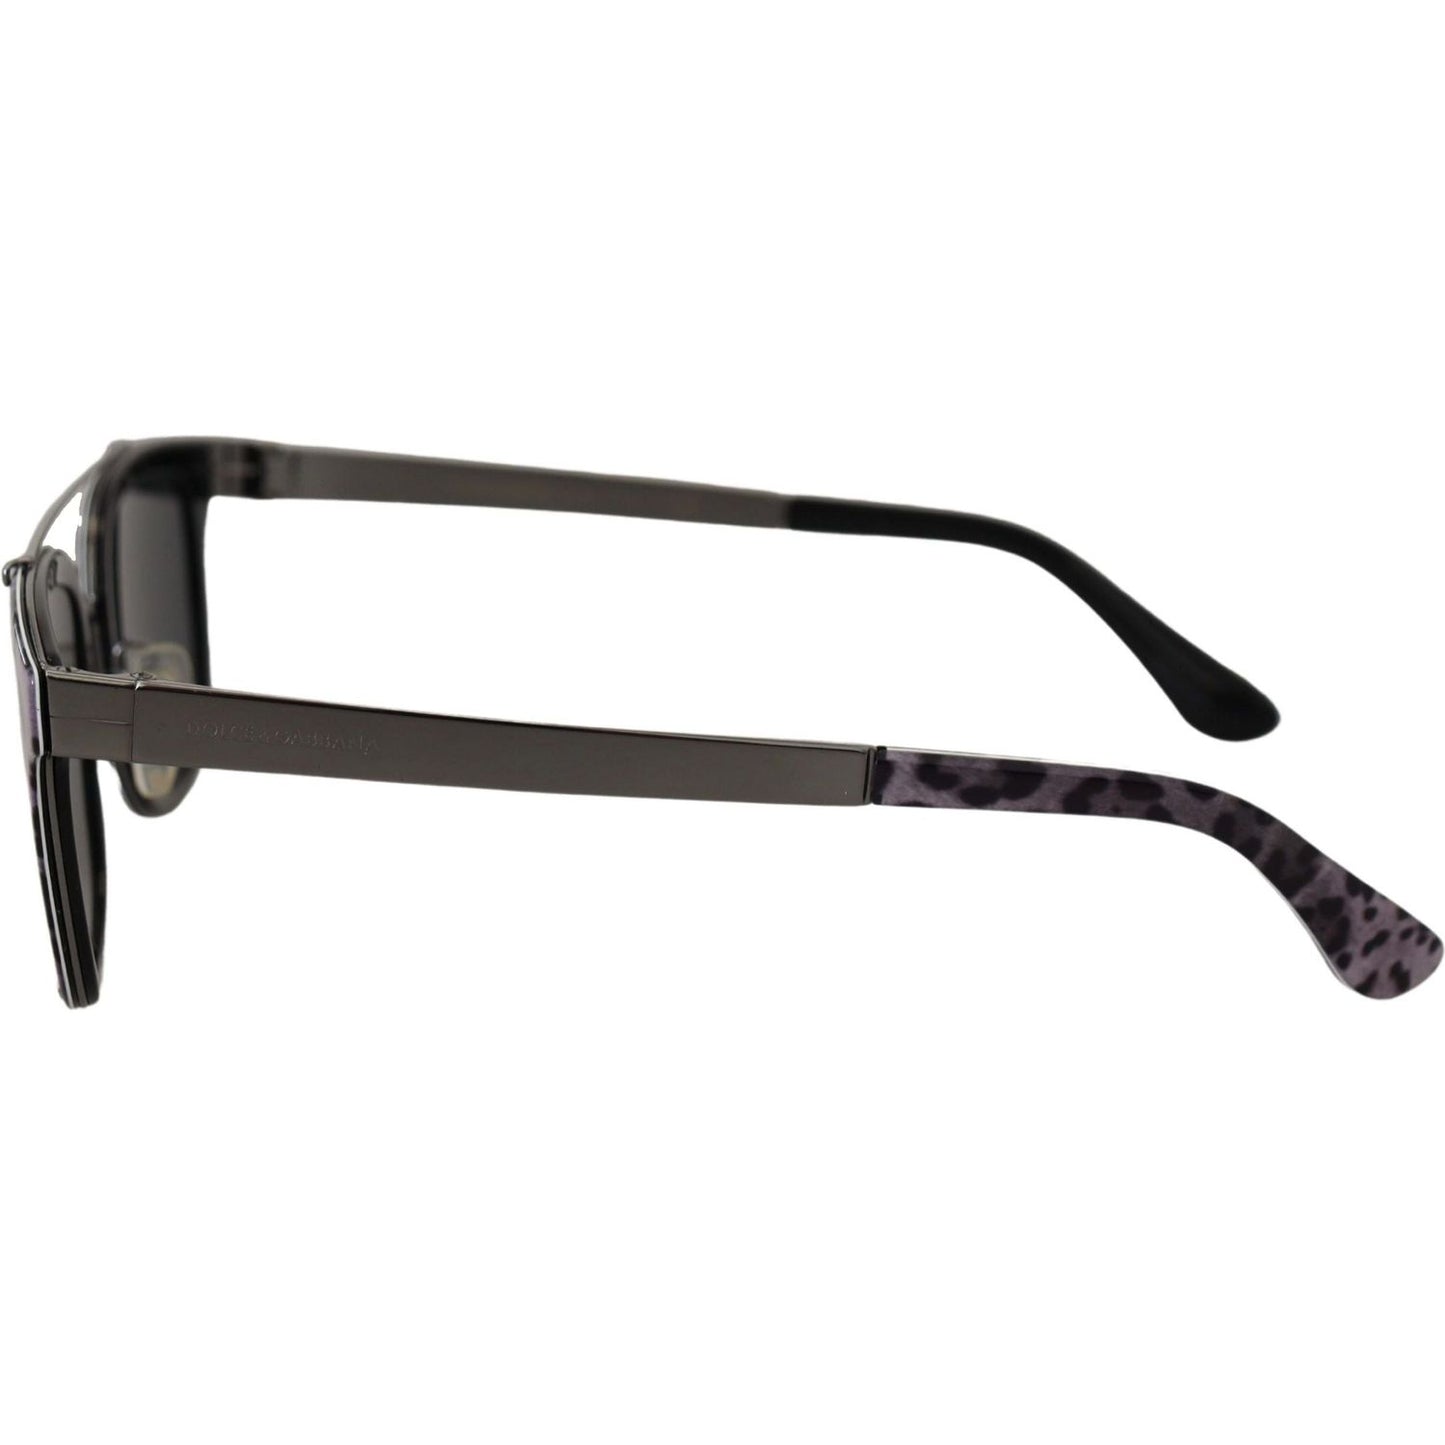 Dolce & Gabbana Chic Purple Lens Metal Frame Sunglasses purple-leopard-metal-frame-women-shades-dg2175-sunglasses